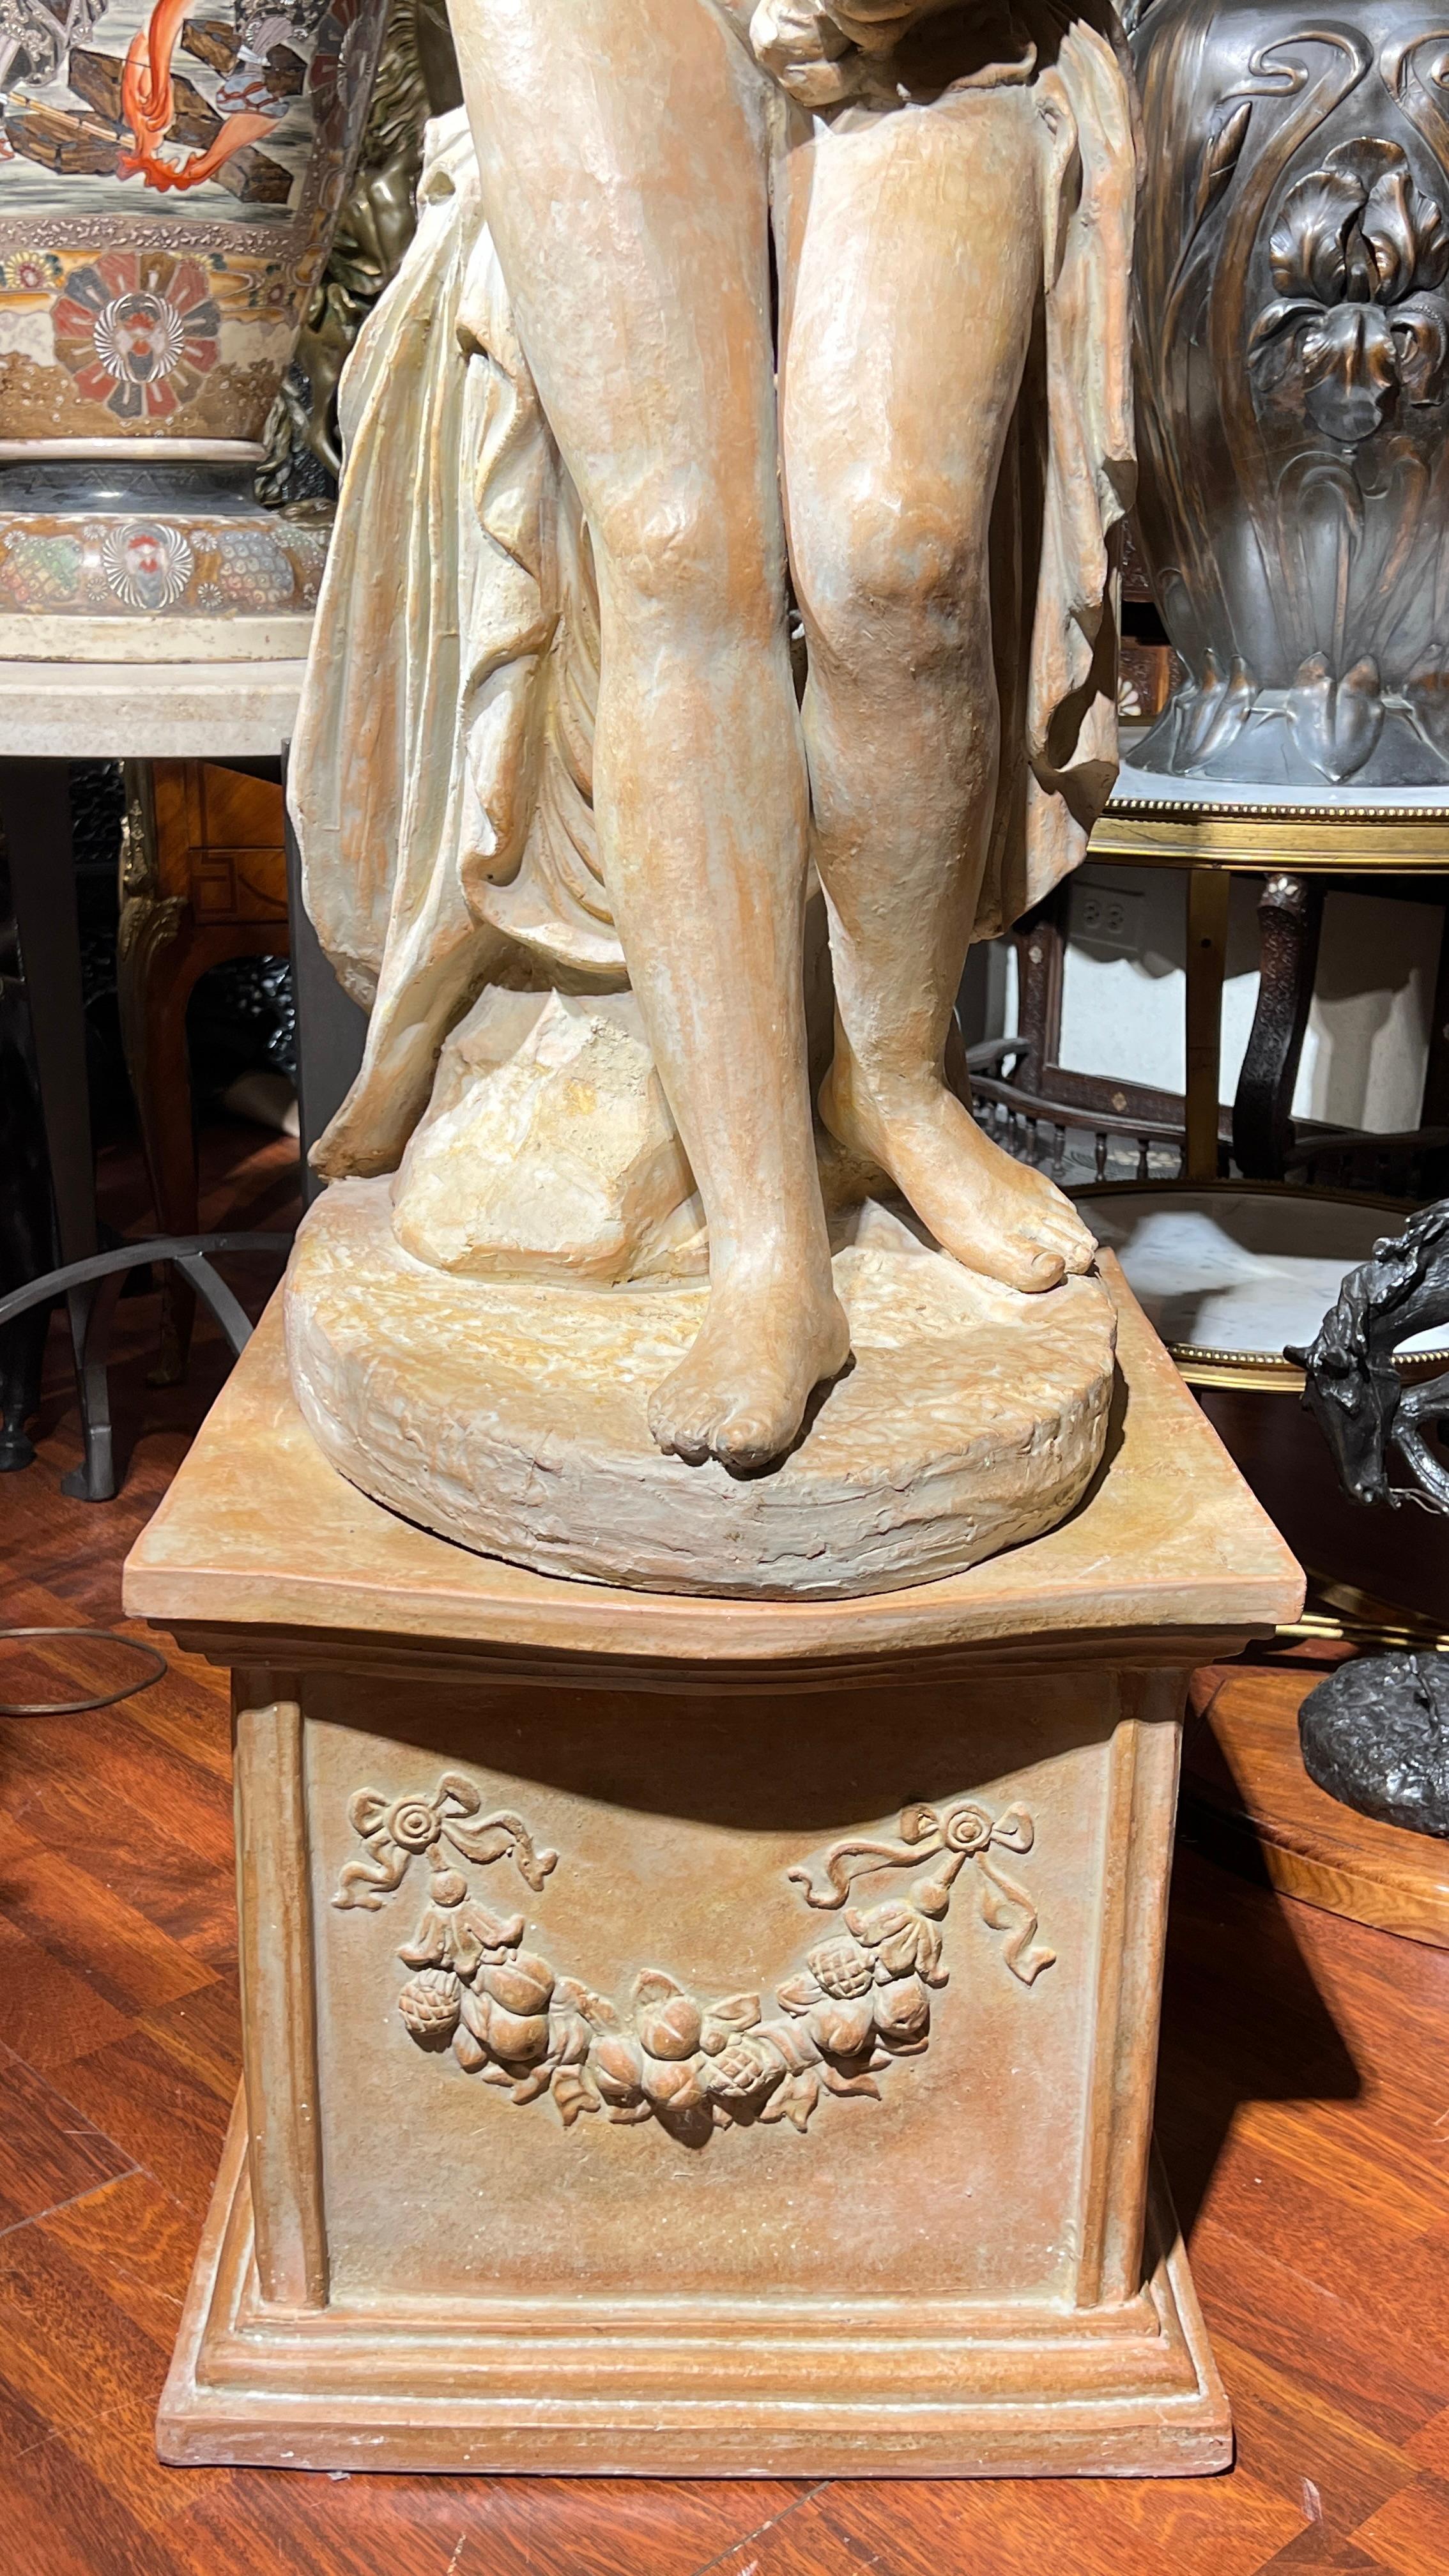 Lovely lifesize terracotta figure of Venus in her bath set upon a rectangular pedestal.